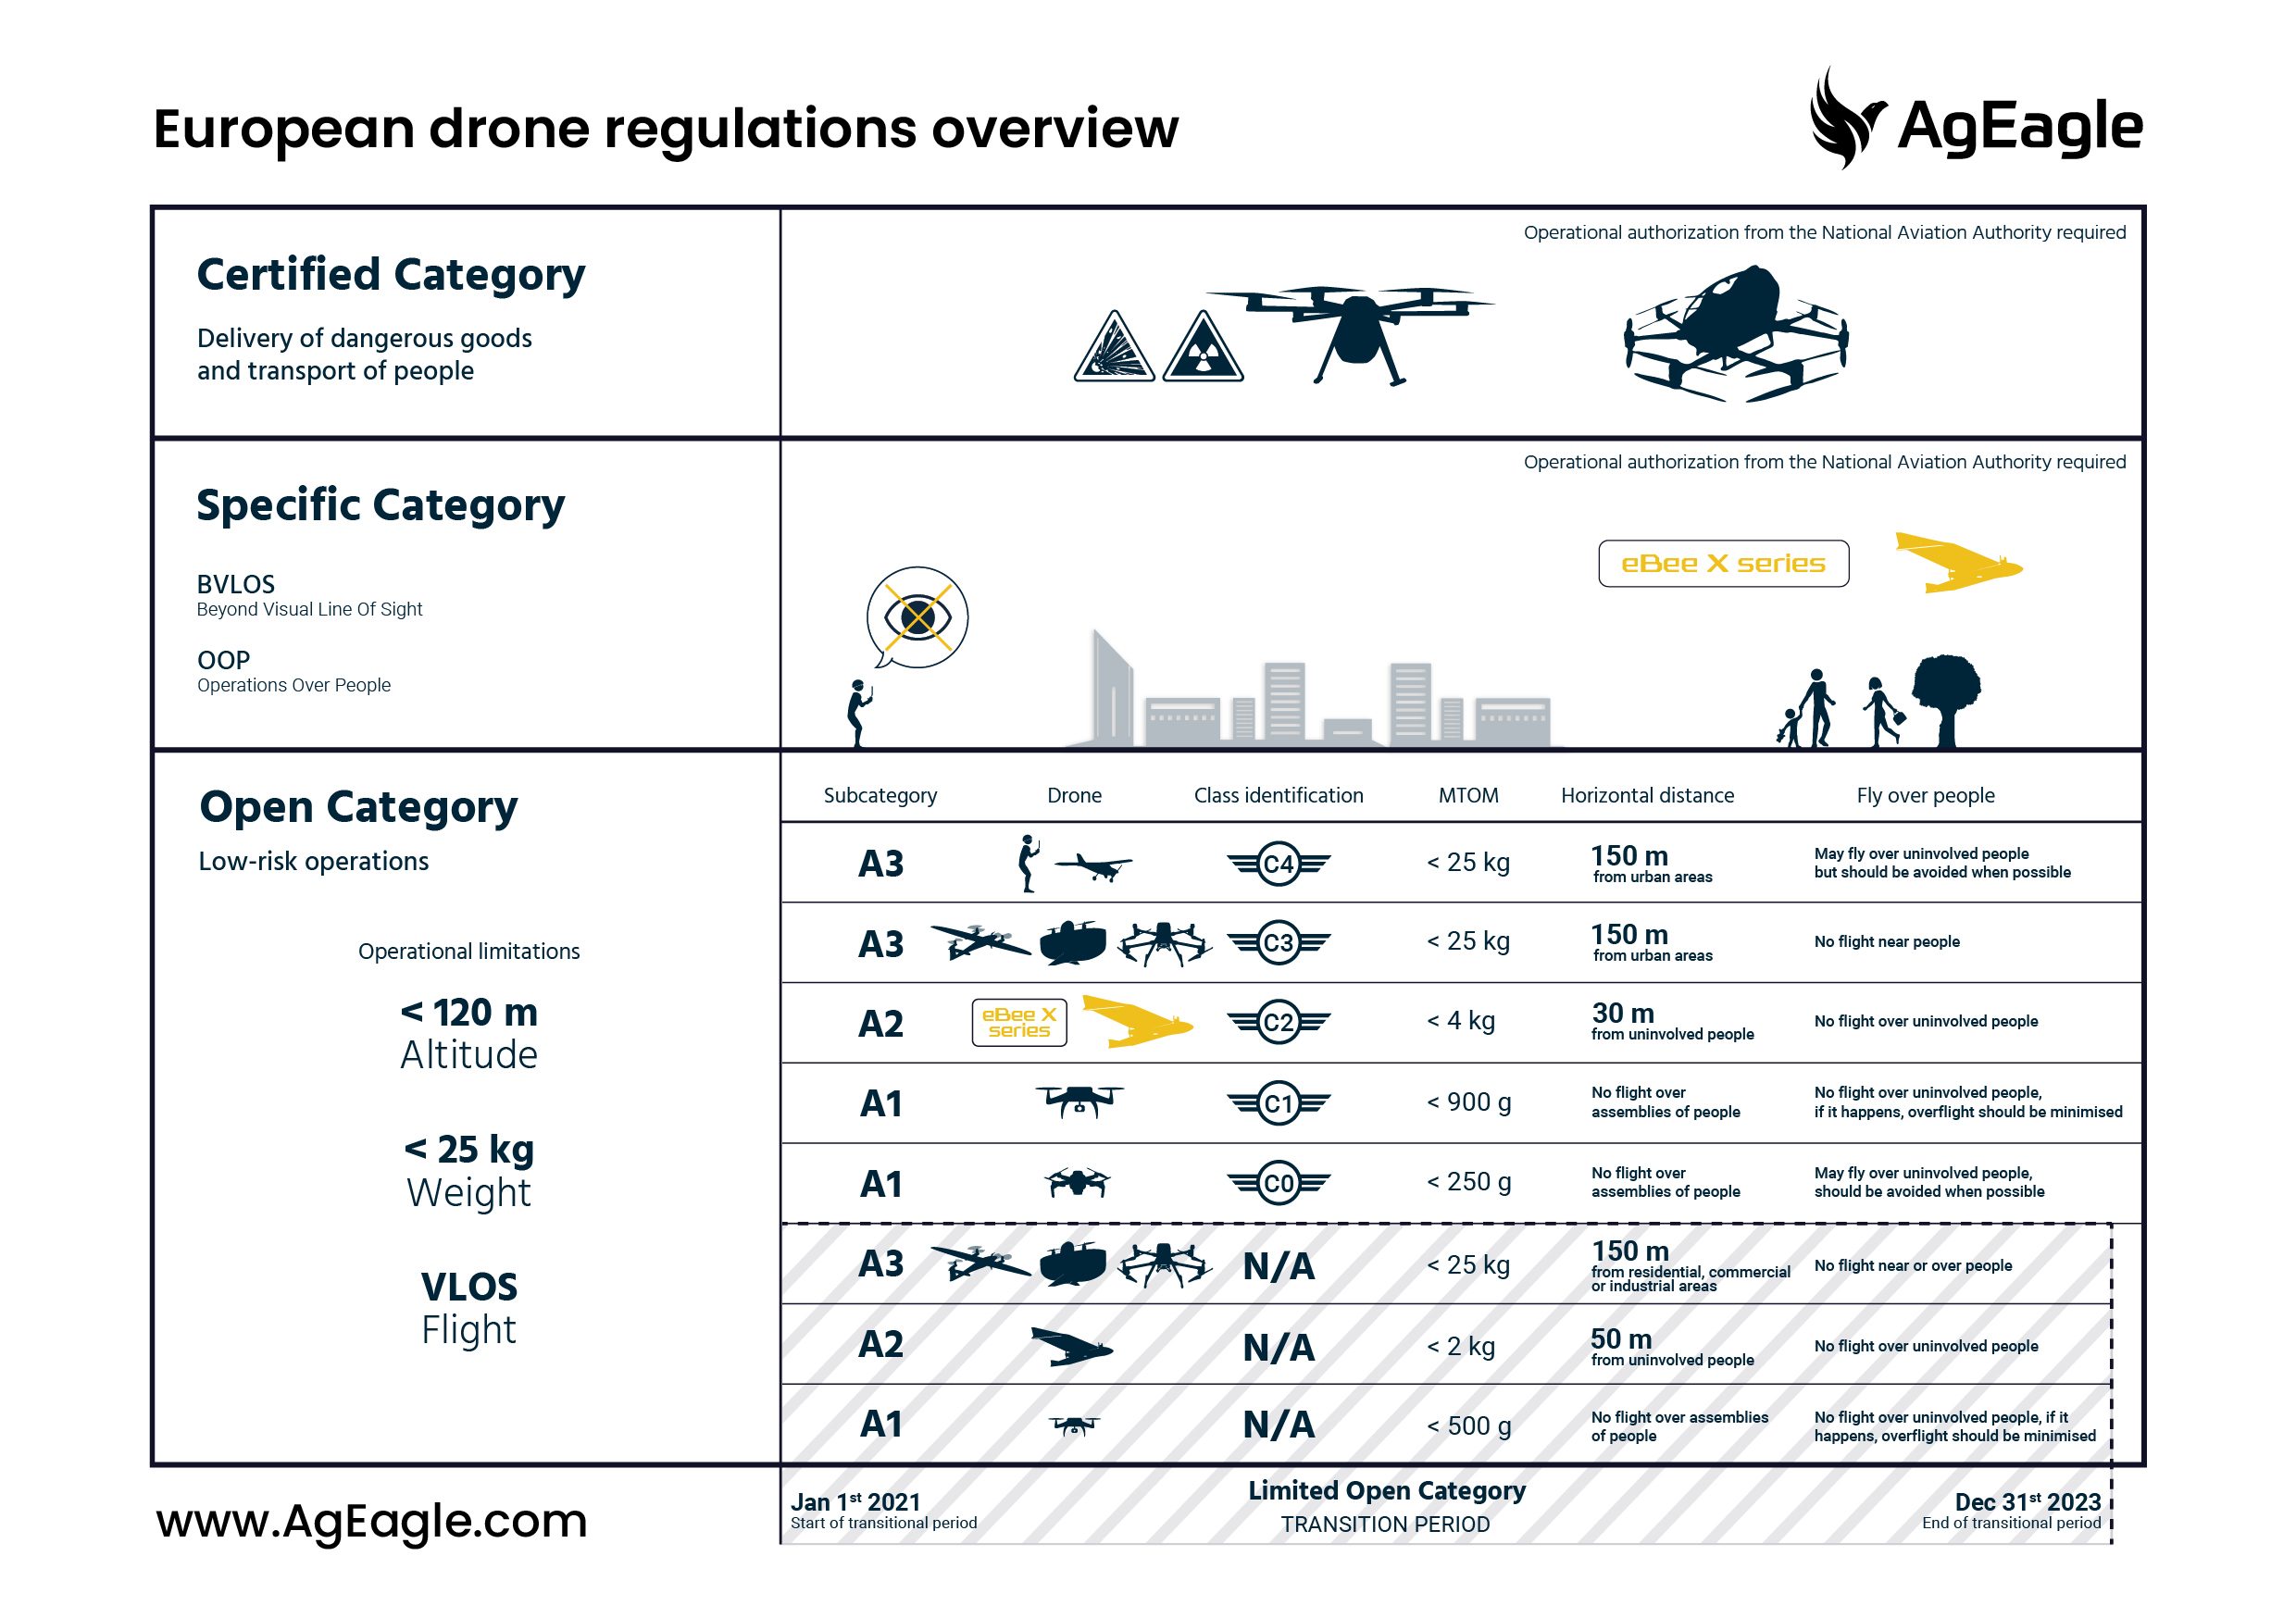 European Union Drone Regulations